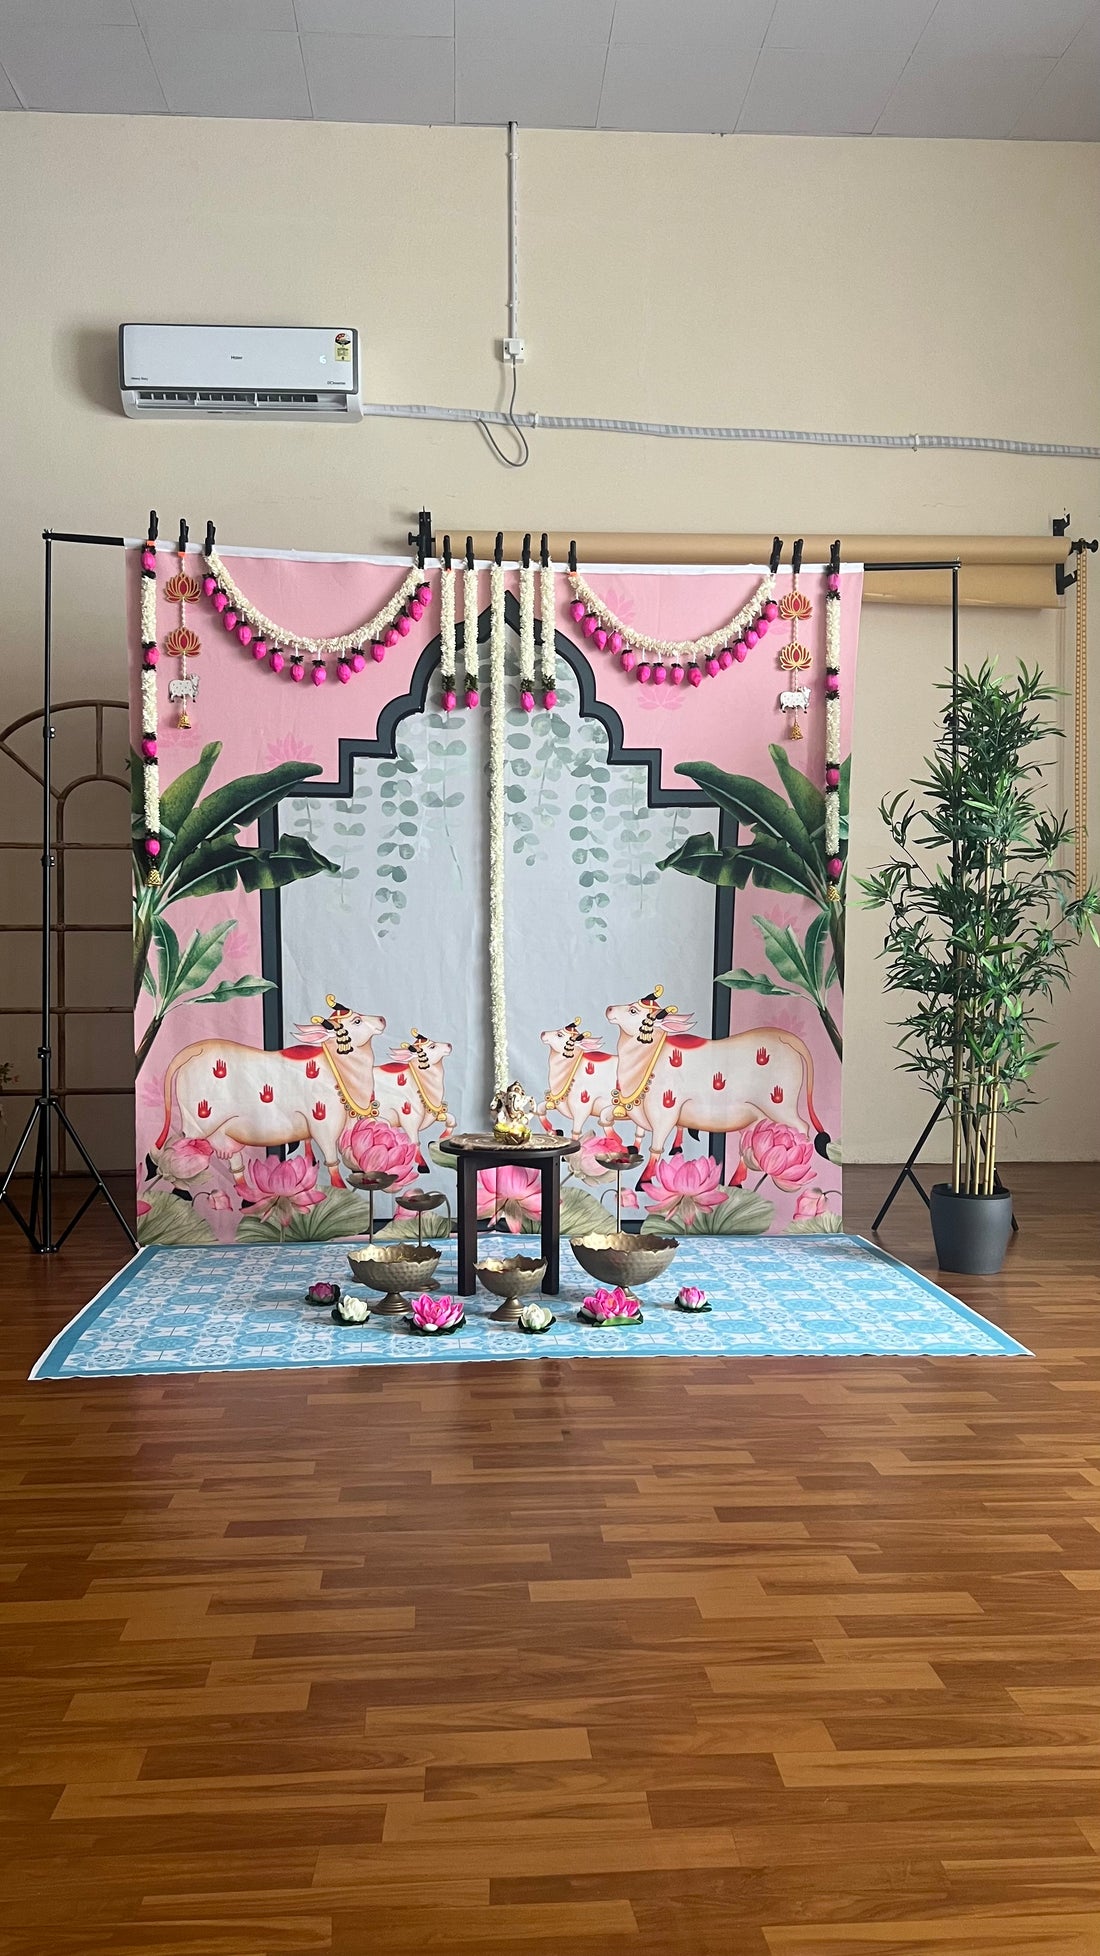 Complete Setup - Backdrop + Floordrop + Decor Flowers